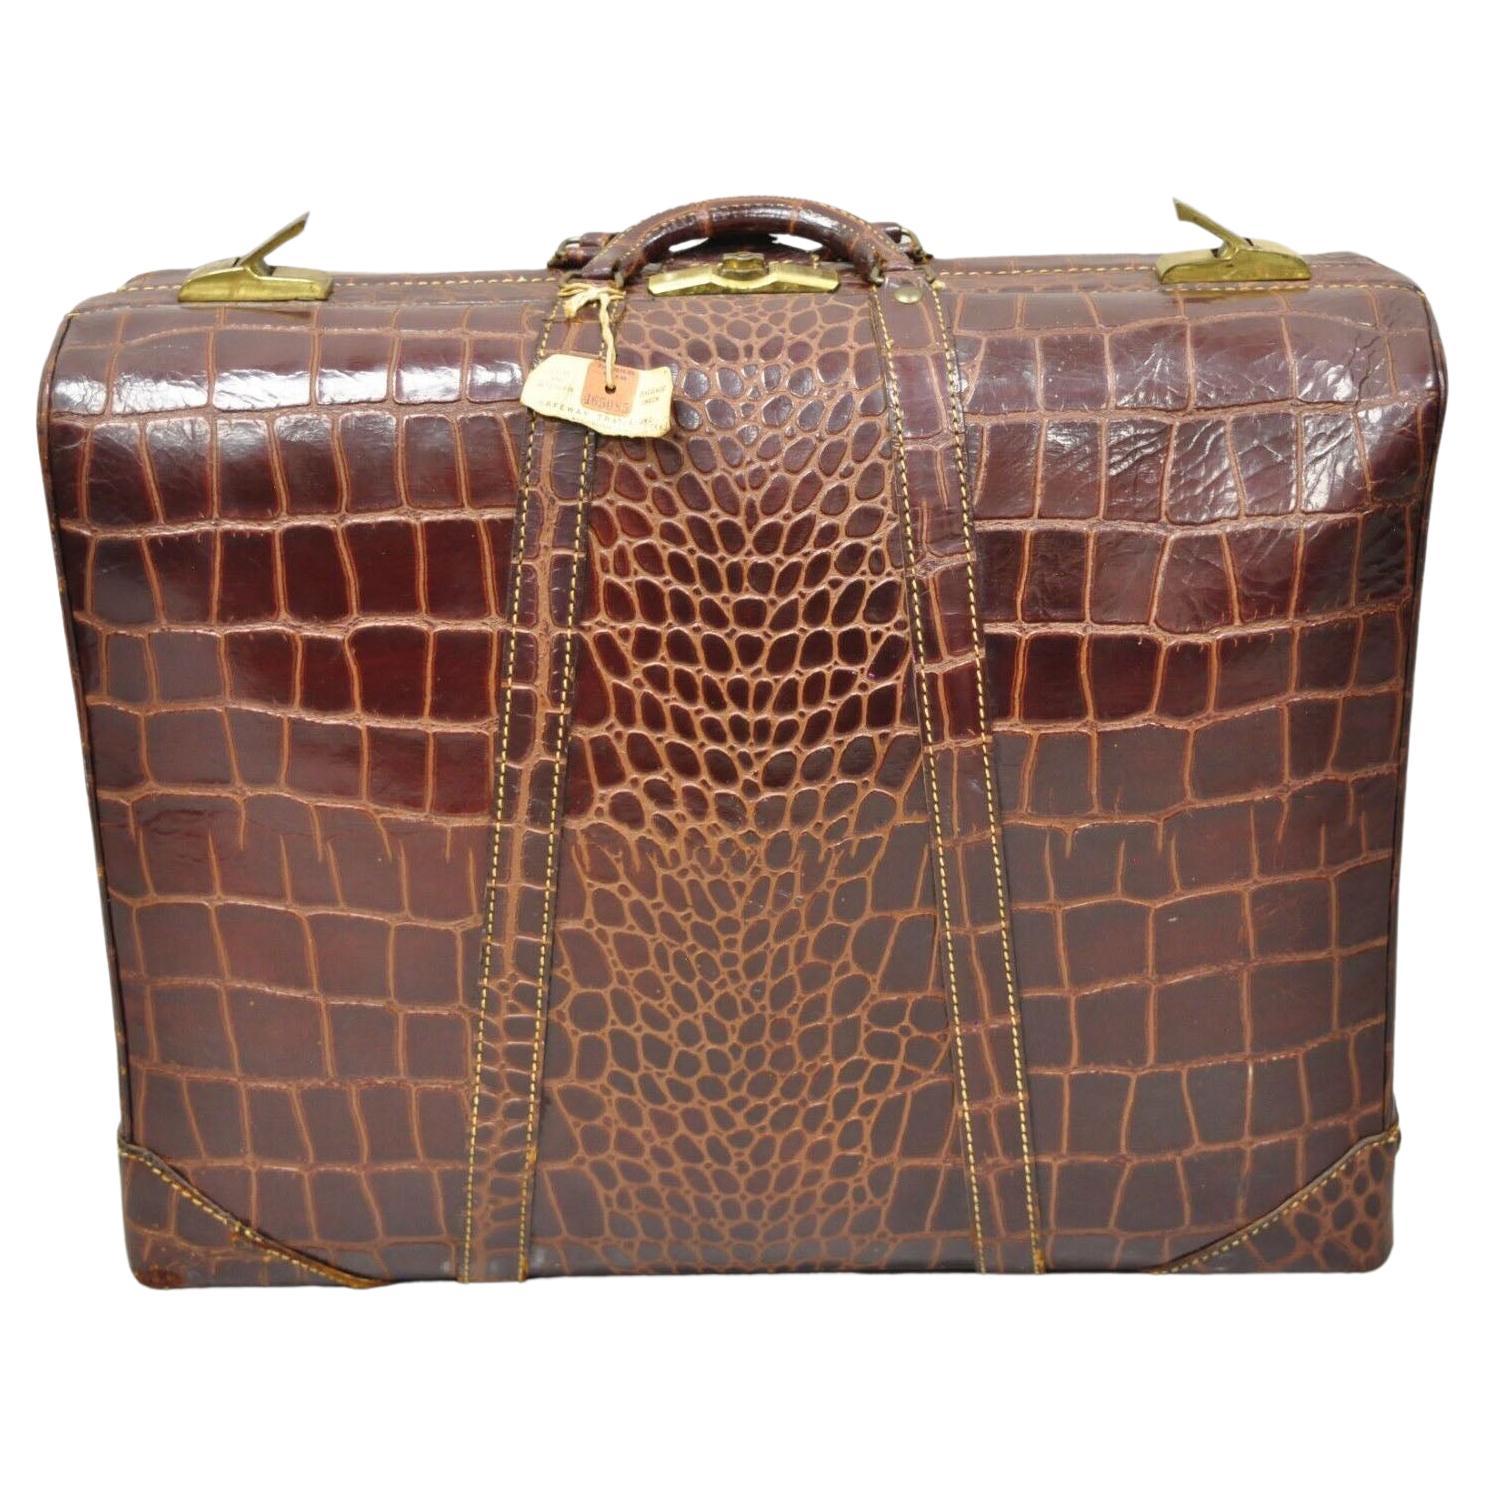 Vintage Burgundy Leather Alligator Embossed Large Suitcase Luggage Bag